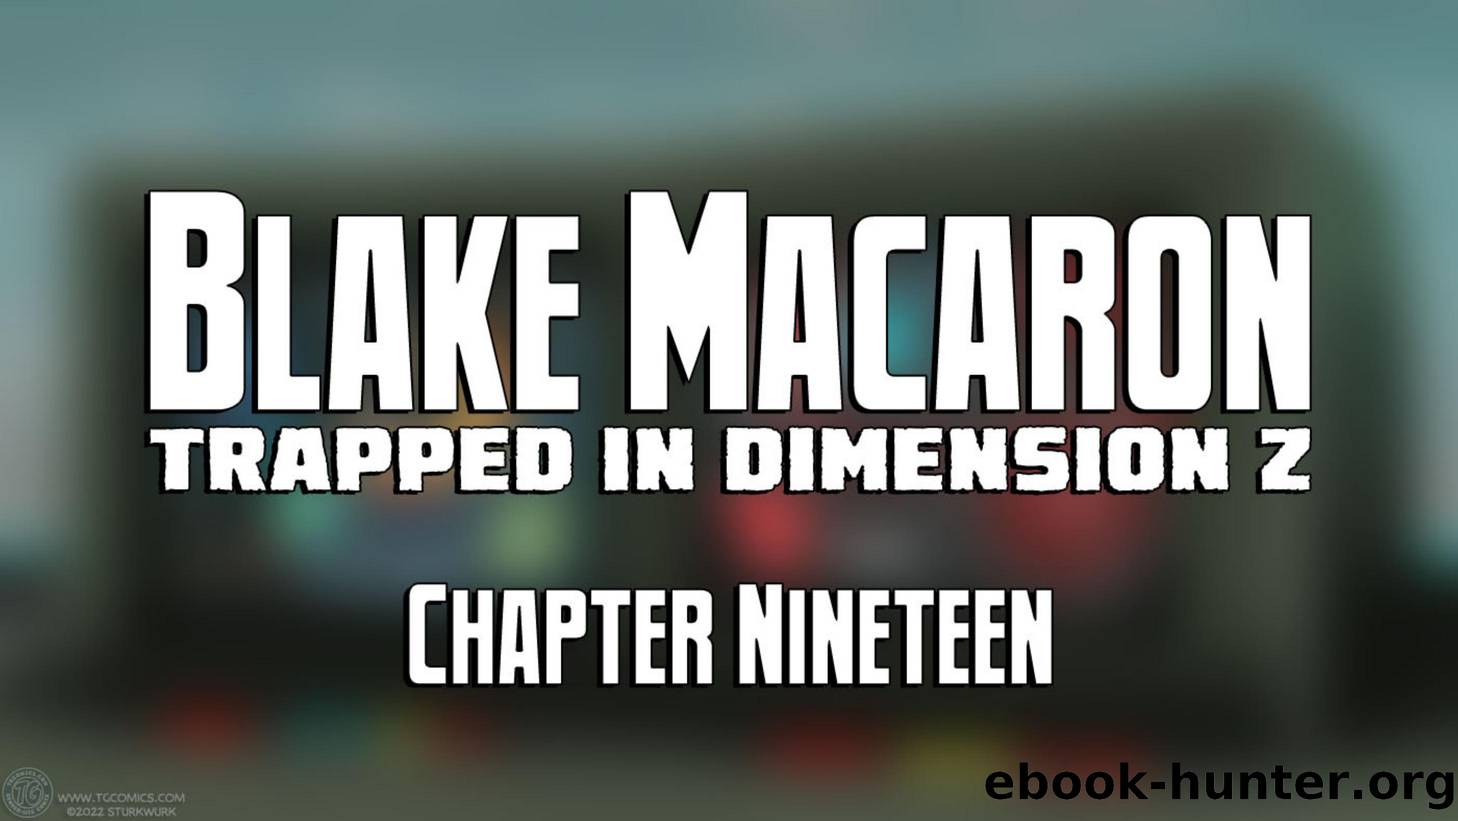 Blake Macaron - Chapter Nineteen by SturkWurk